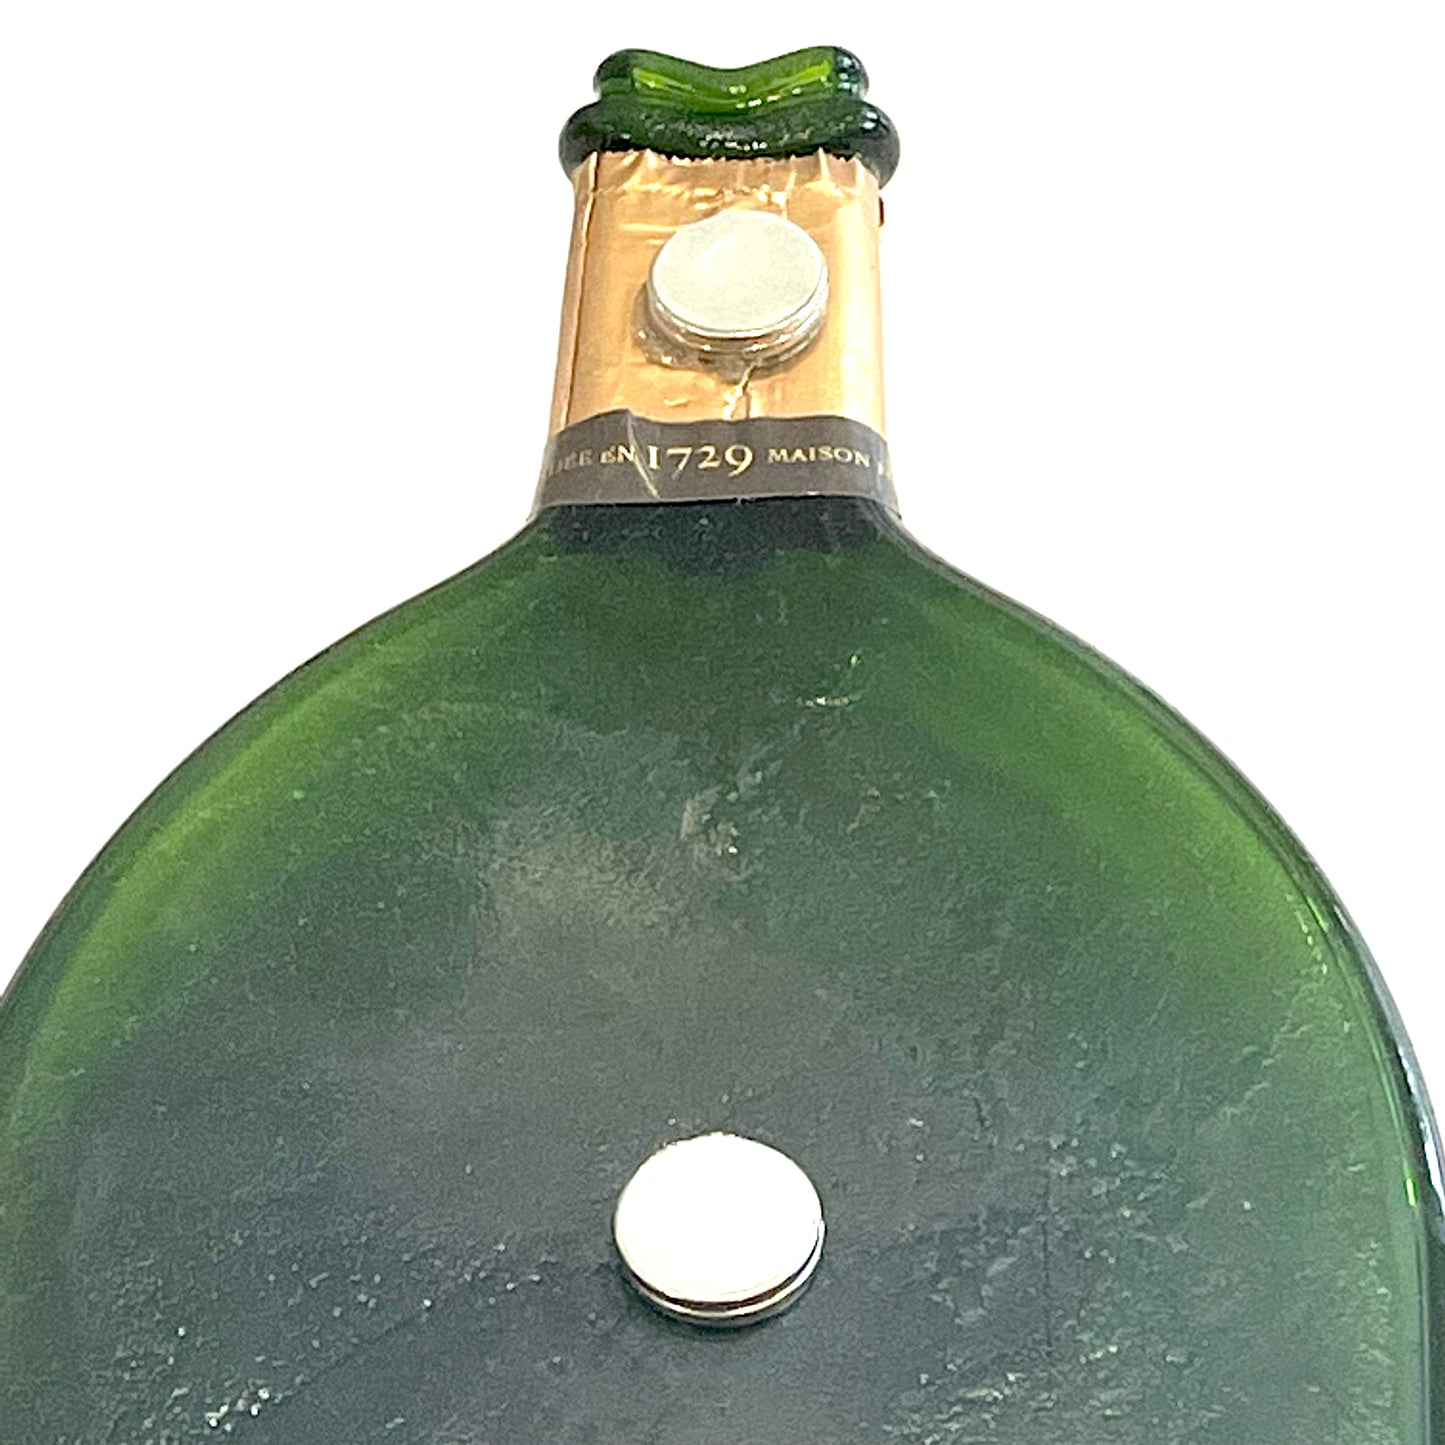 MAGNUM bottle of melted champagne